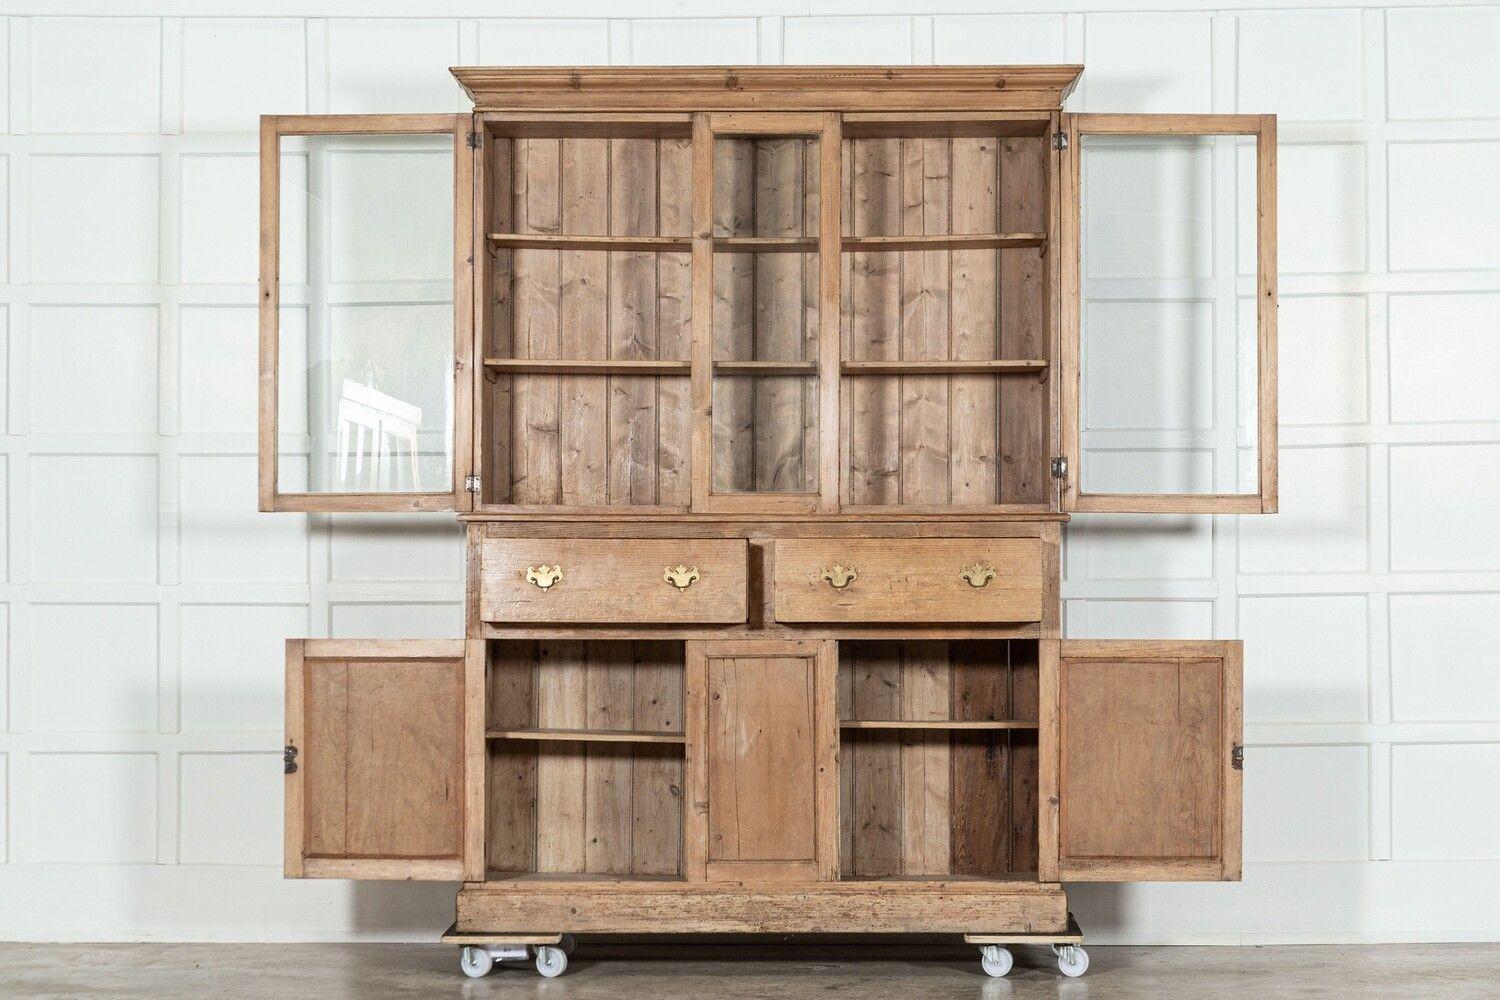 circa 1890
Large English Pine Glazed Dresser
sku 1744
Base W153 x D47 x H104 cm
Top W161 x D42 x H113 cm
Together W161 x D47 x H207 cm
Weight 97 Kg